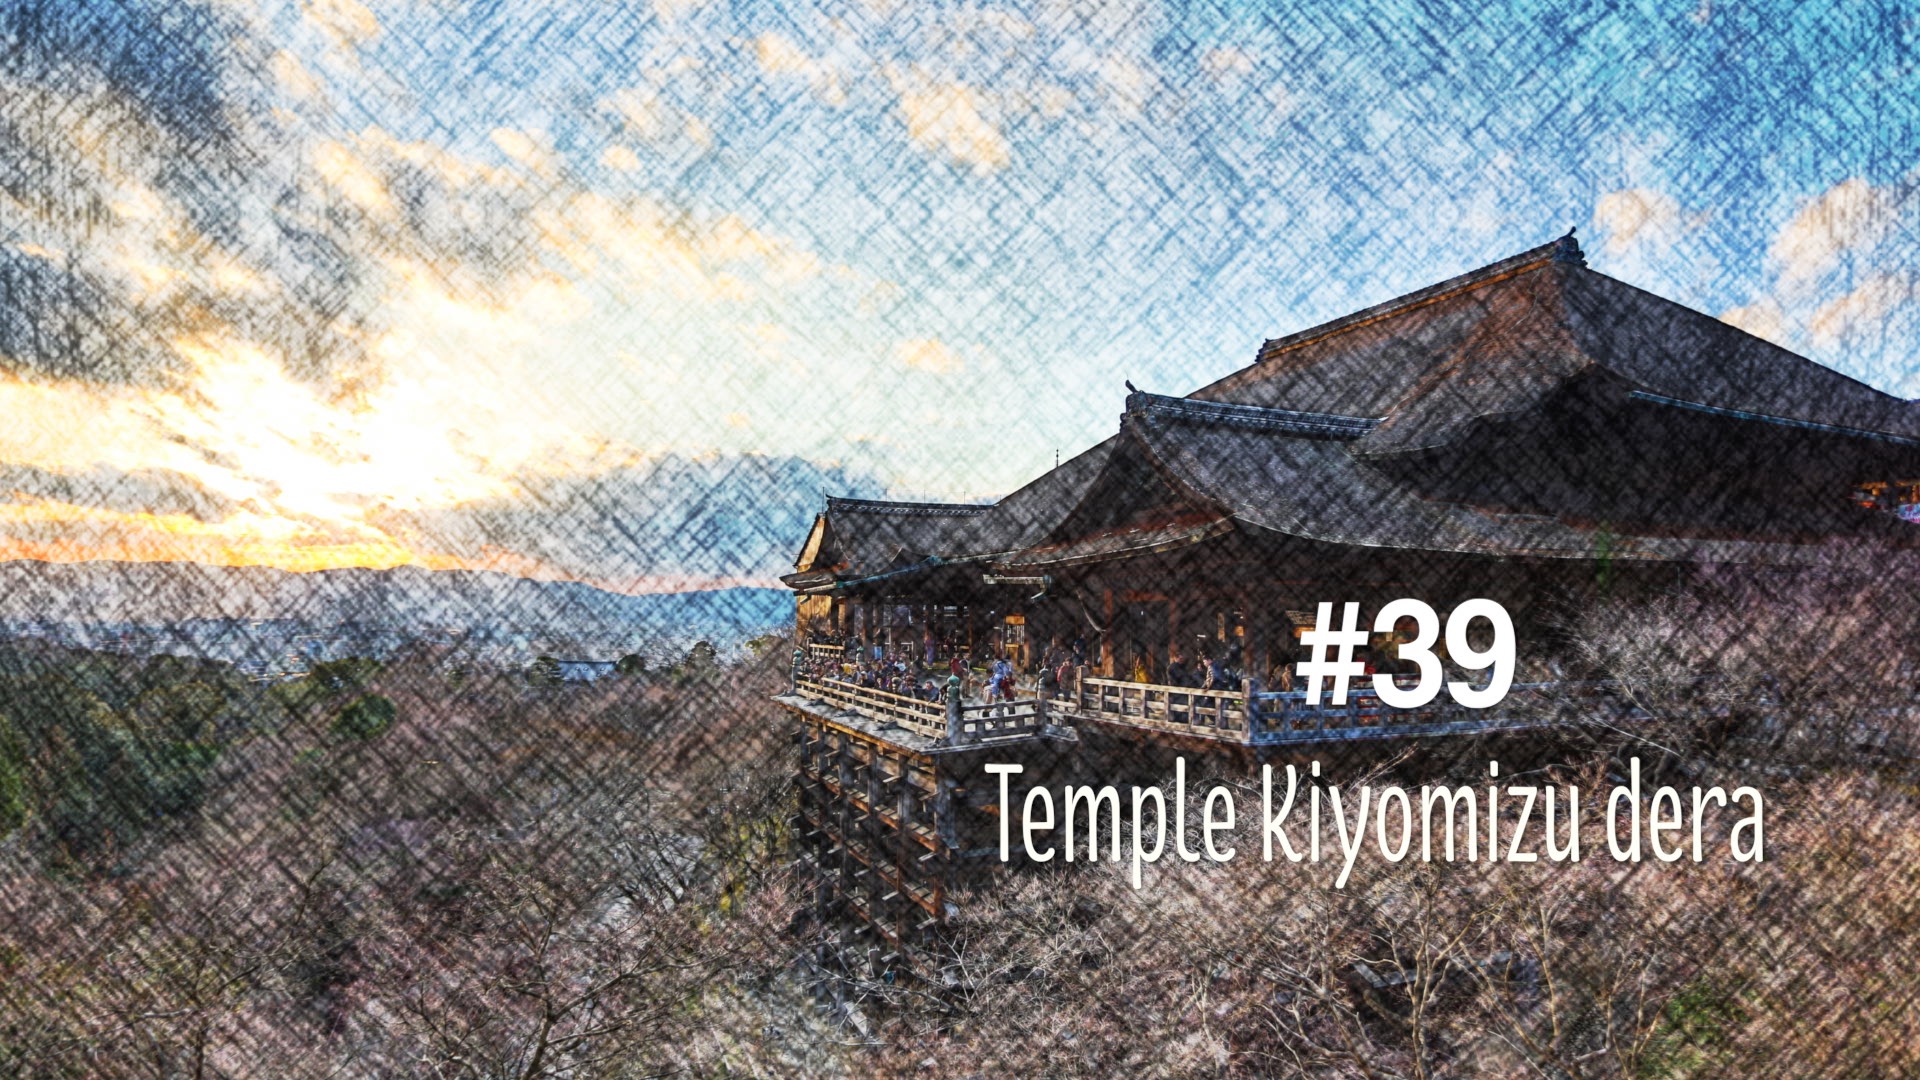 Visite du temple de Kiyomizu dera à Kyoto